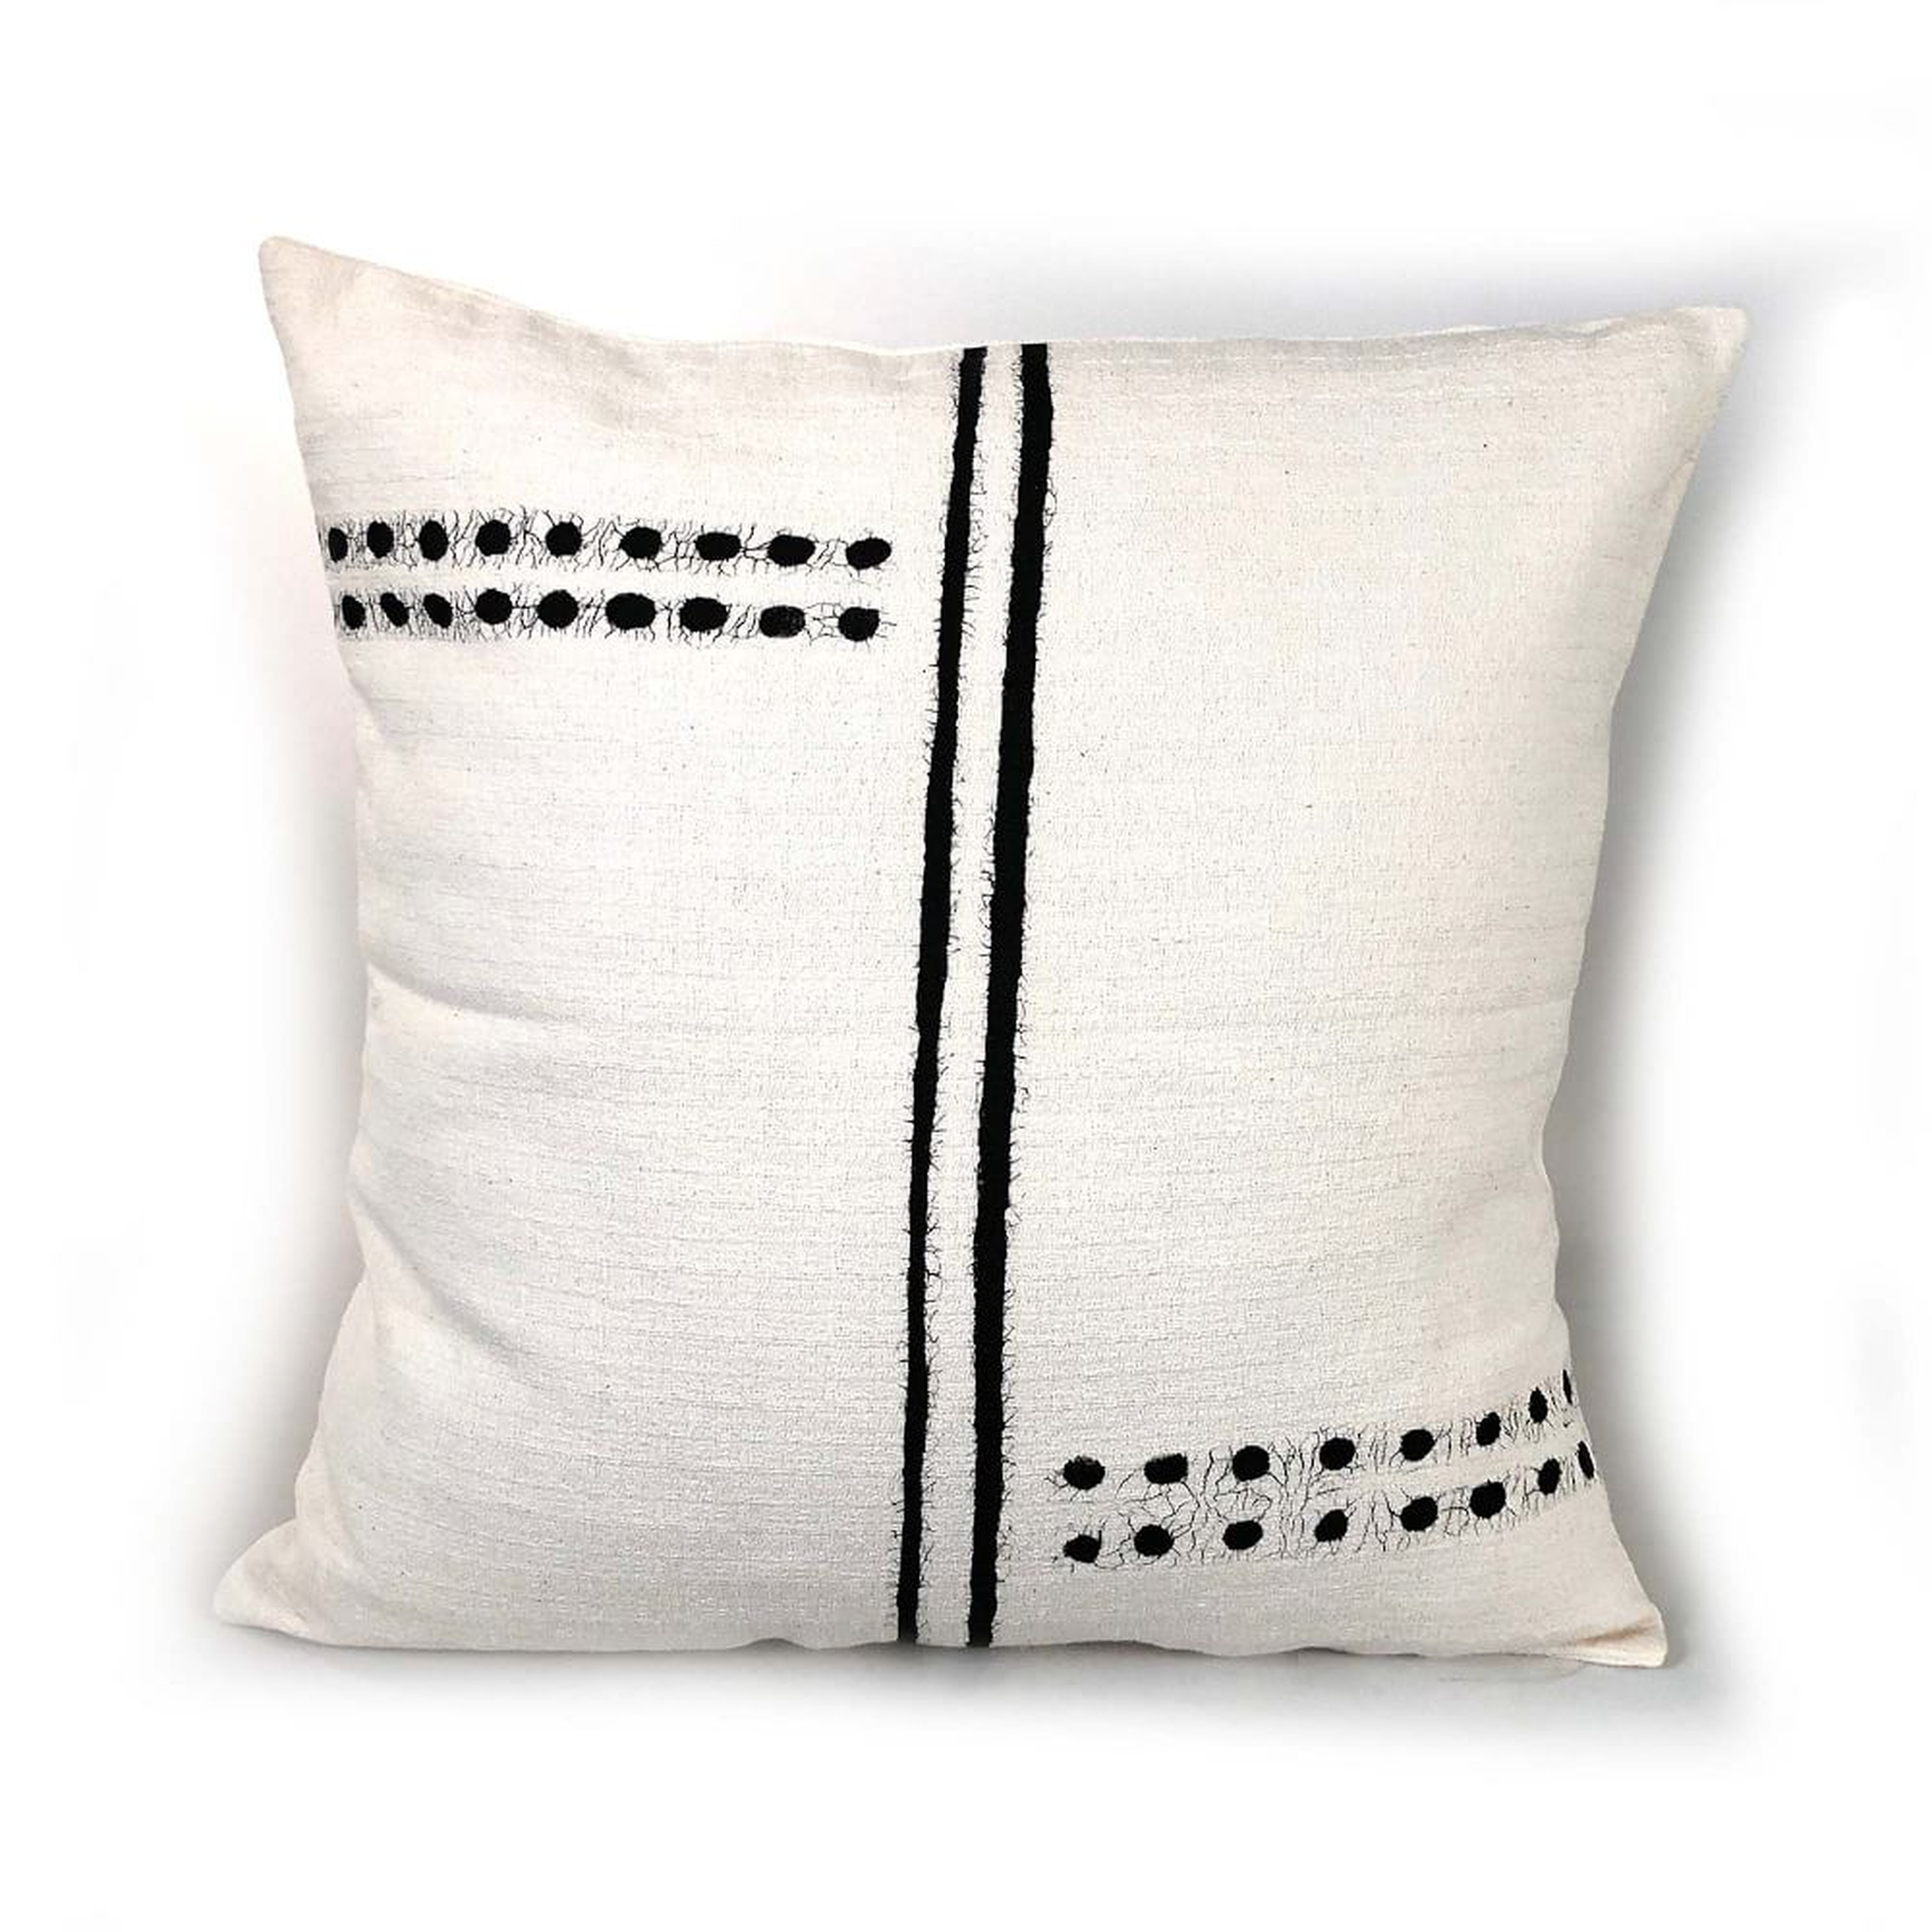 Tonga Pillow Cover, Black Dots & Lines - West Elm